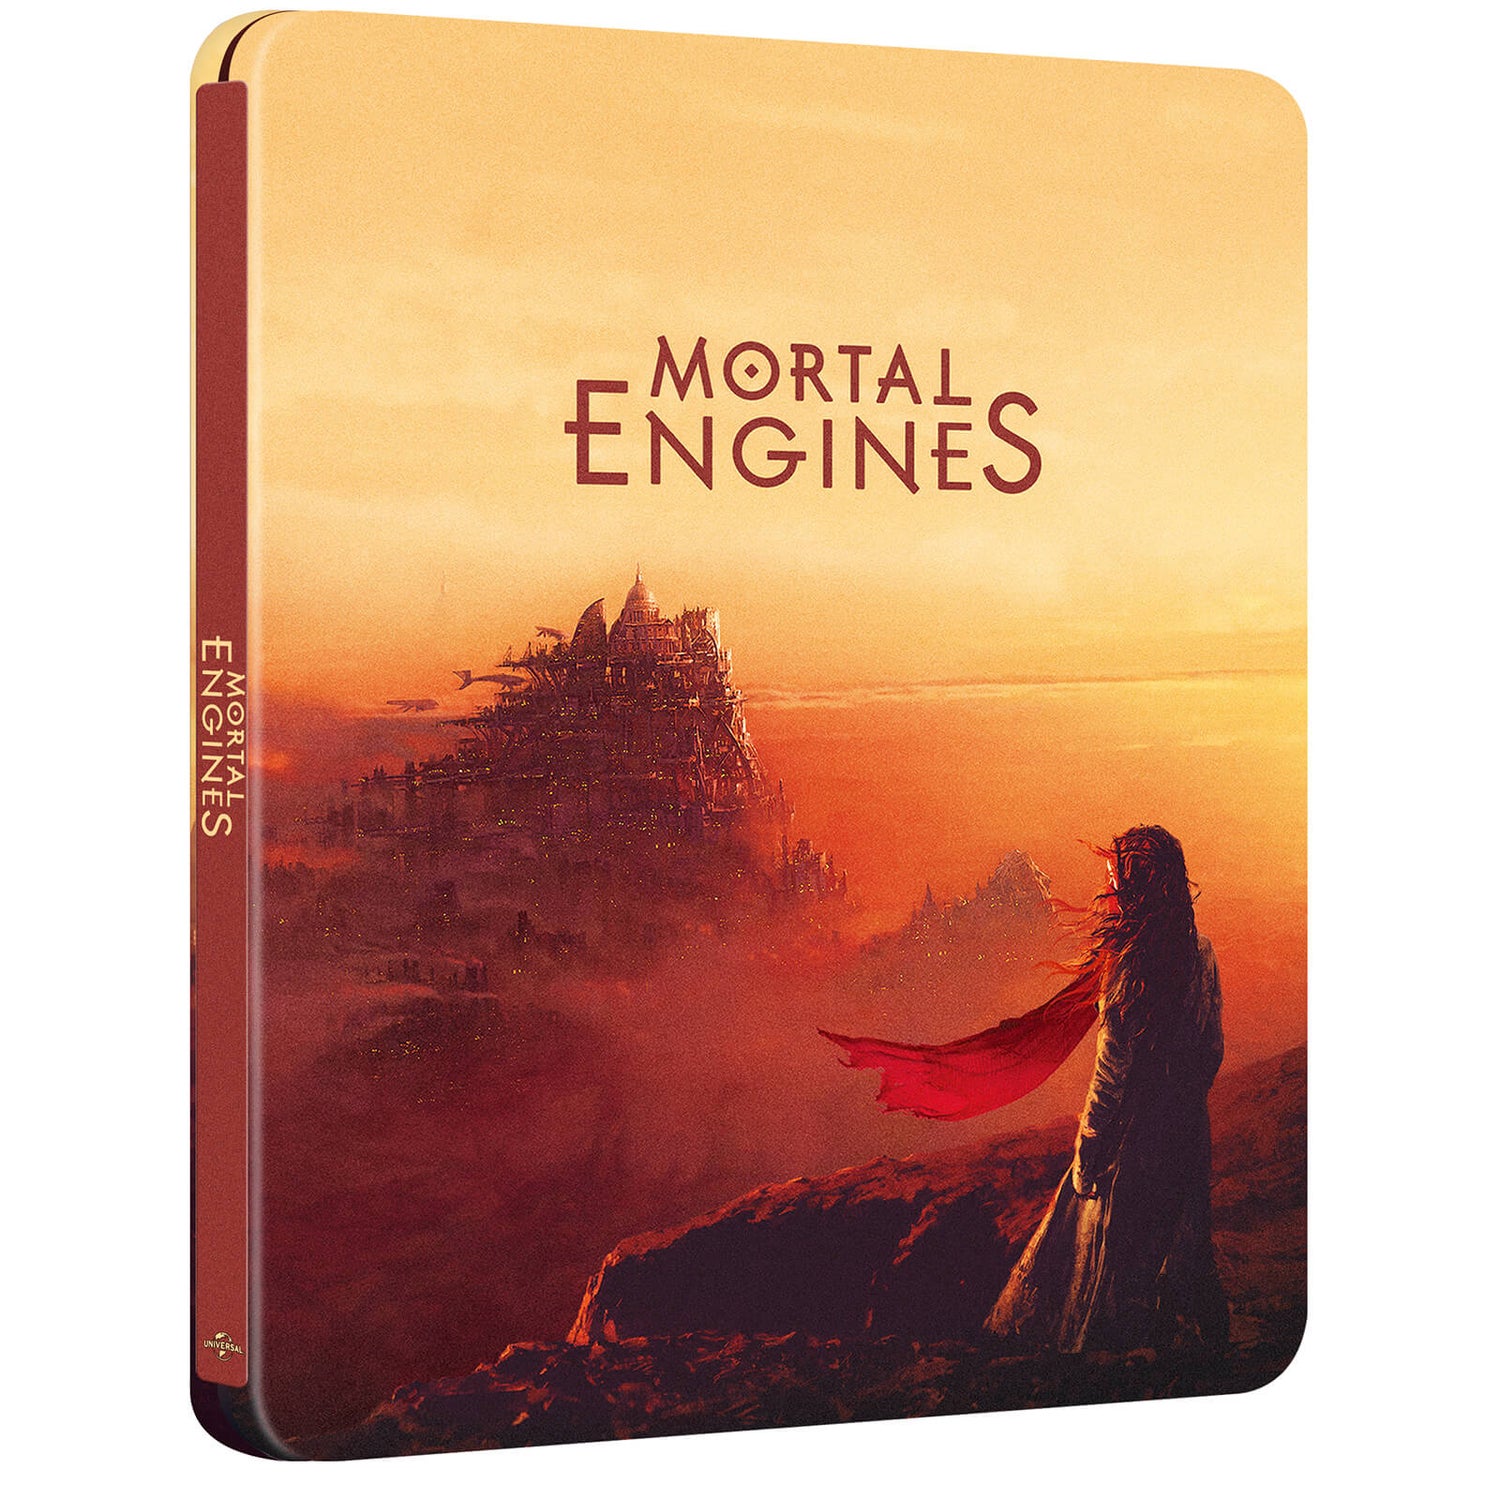  Mortal Engines [Blu-ray] : Hugo Weaving, Hera Hilmar